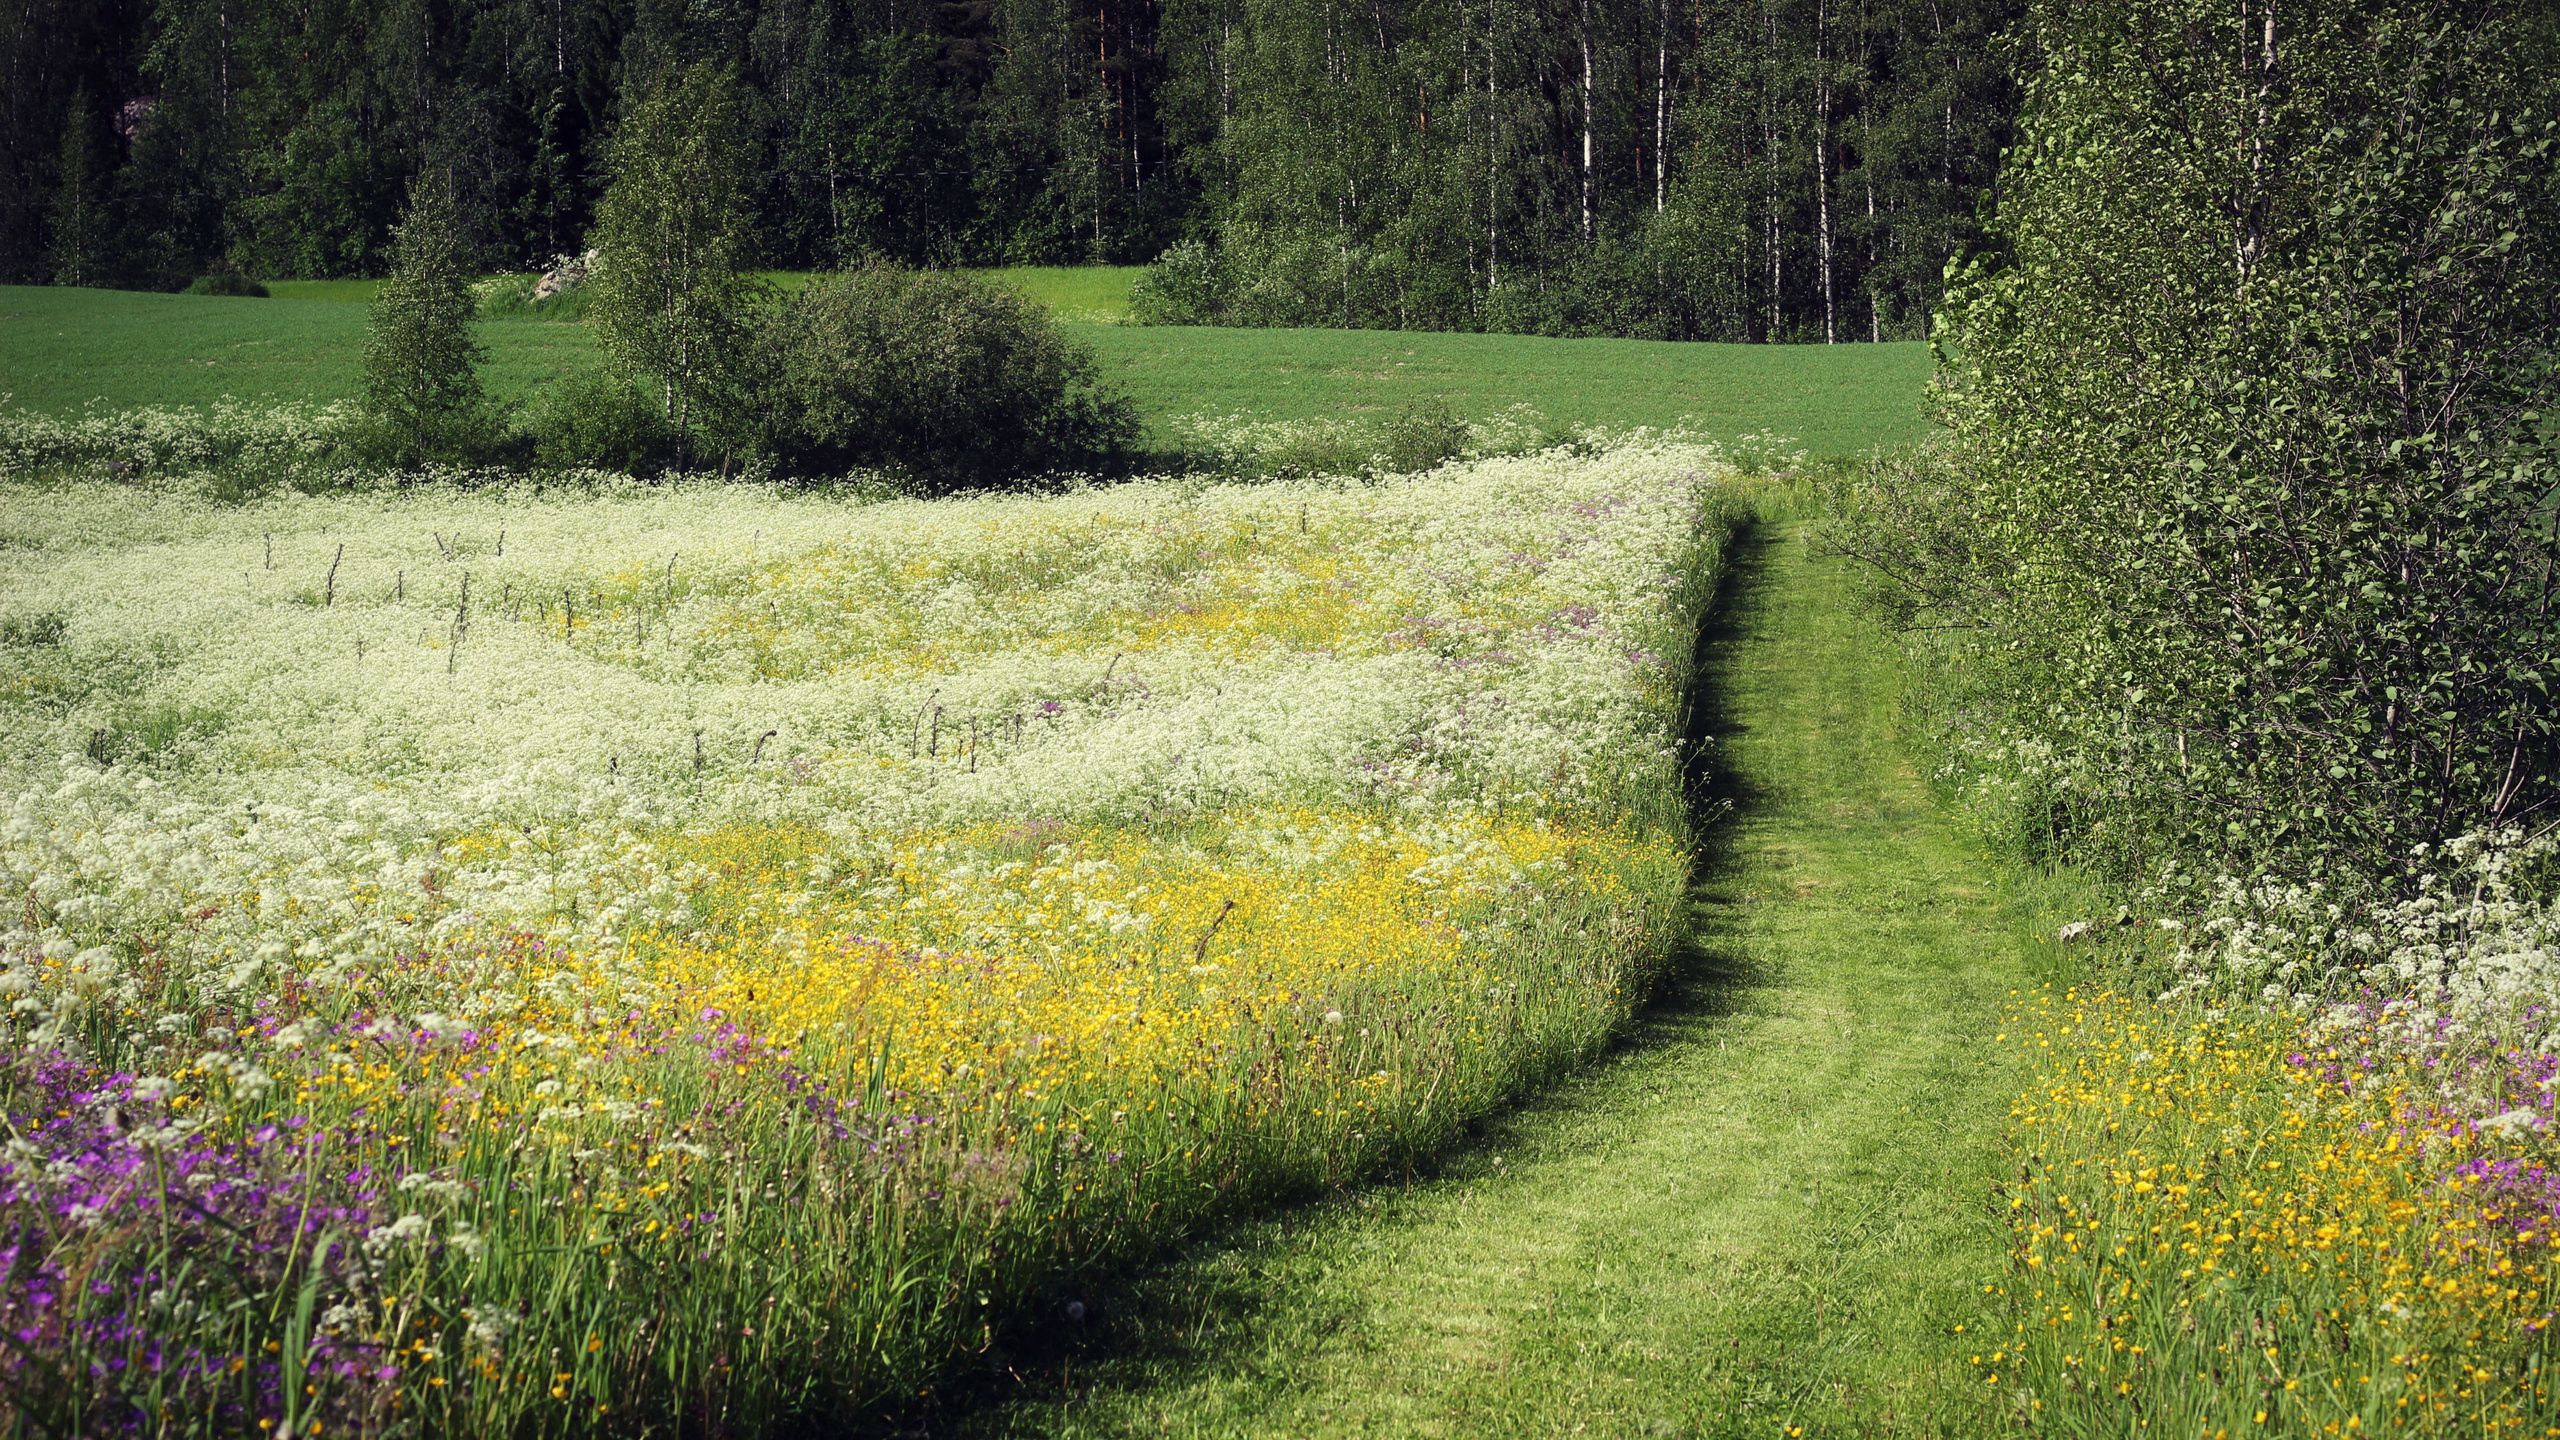 Download wallpaper 2560x1440 field, herbs, flowers, summer, trees, path, june widescreen 16:9 HD background